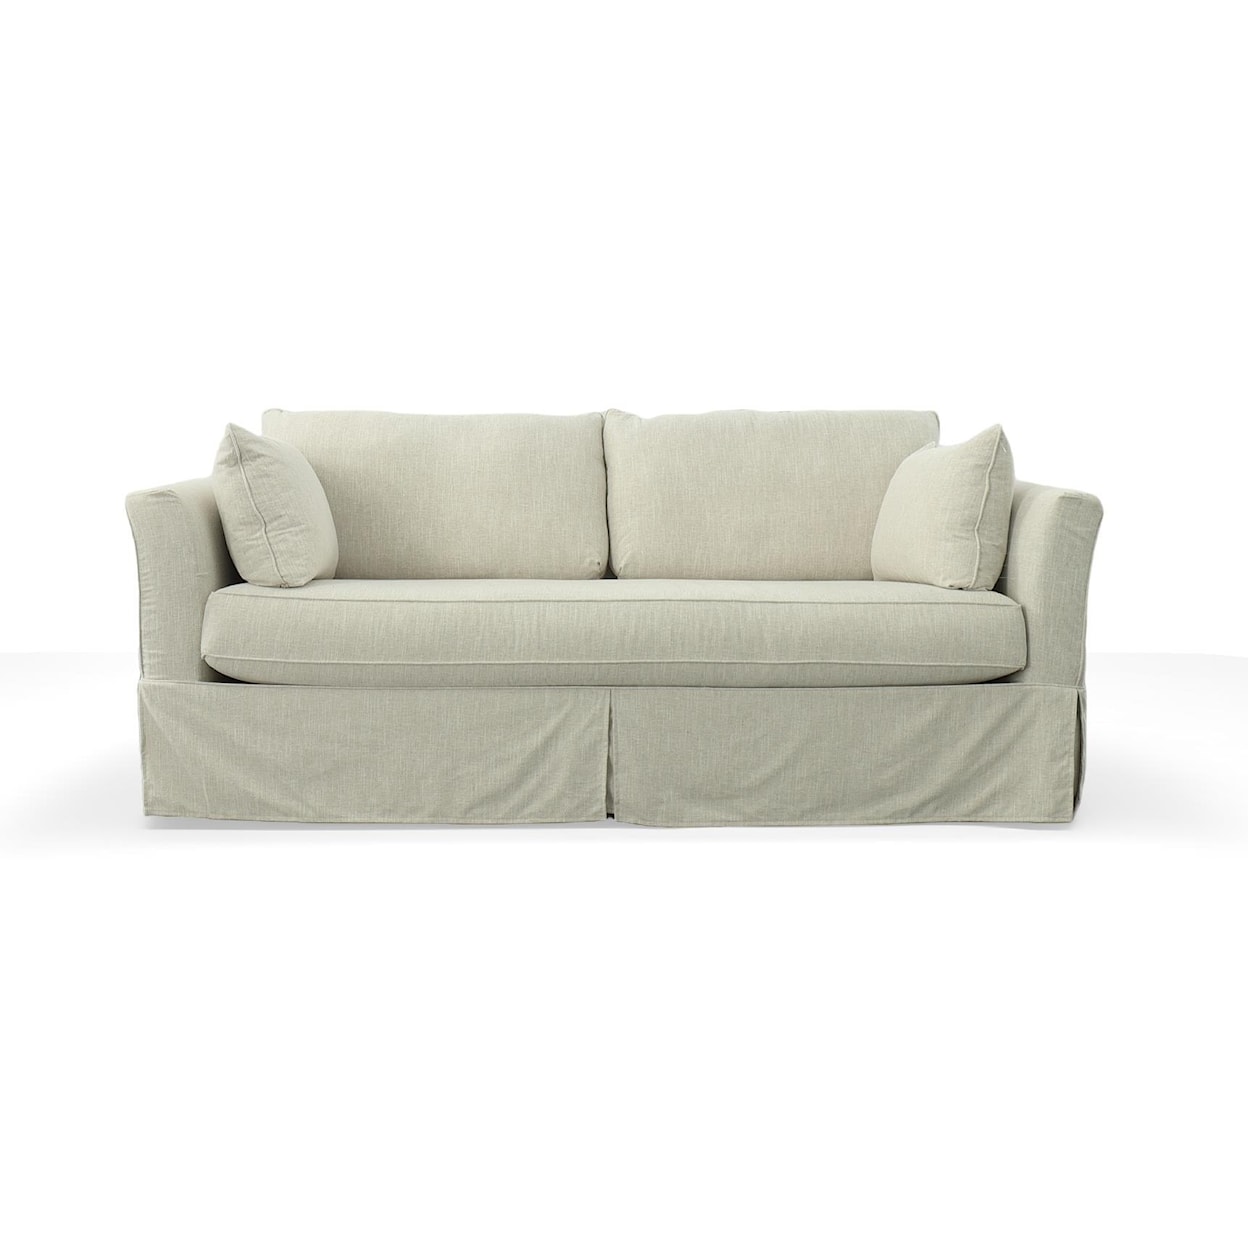 Rowe Darby Slipcover Sofa